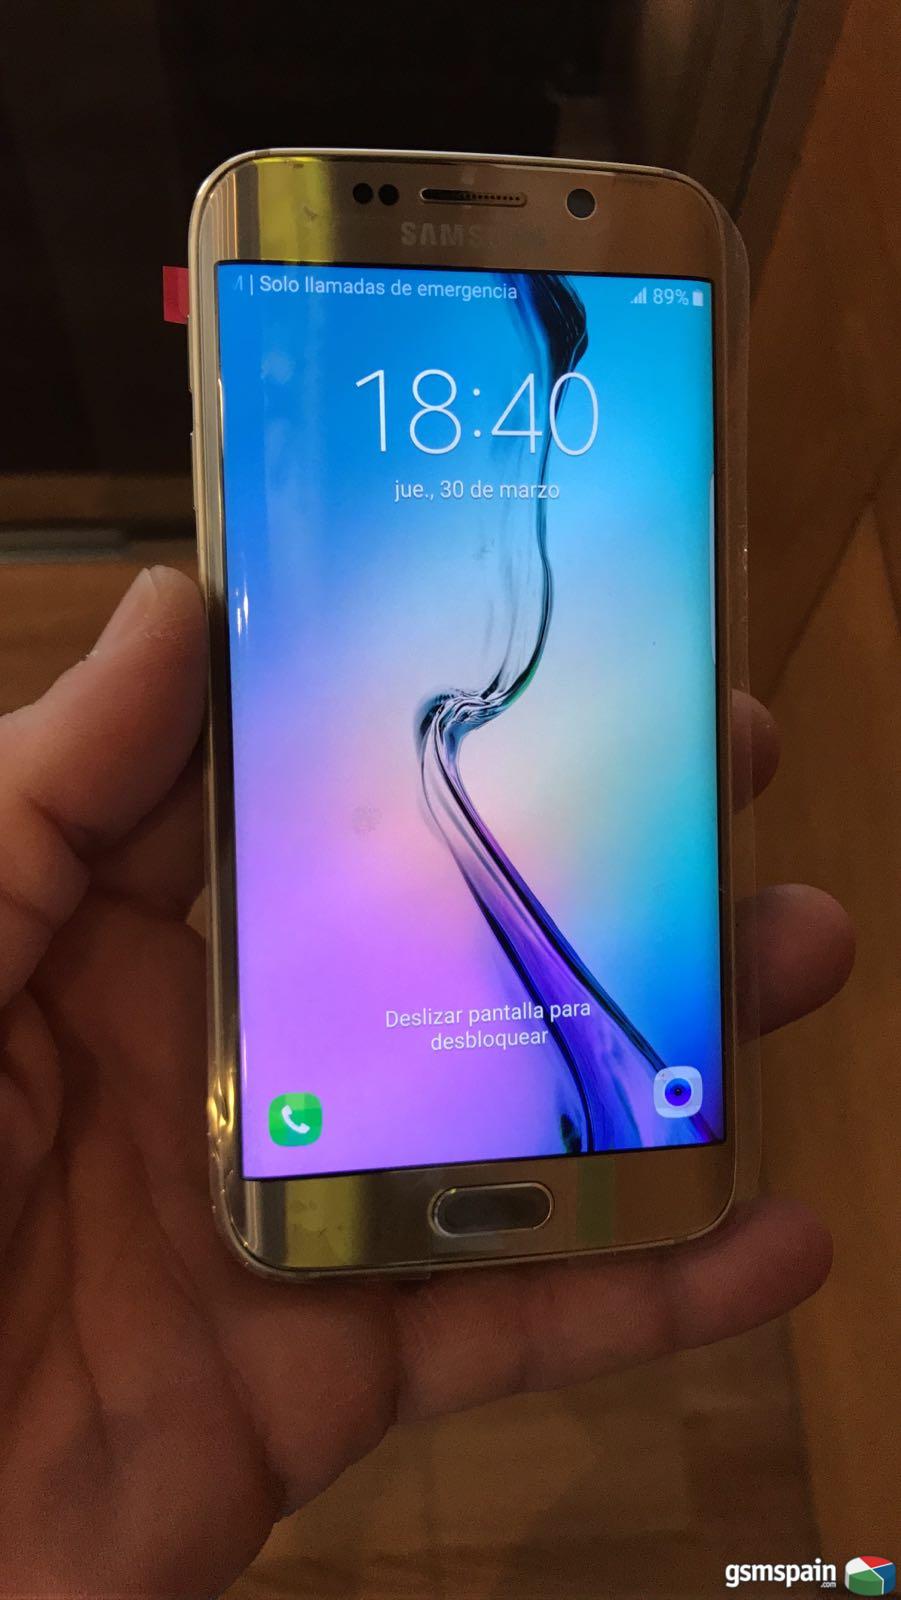 [VENDO] Galaxy S6 Edge Gold 64 Gb a Estrenar